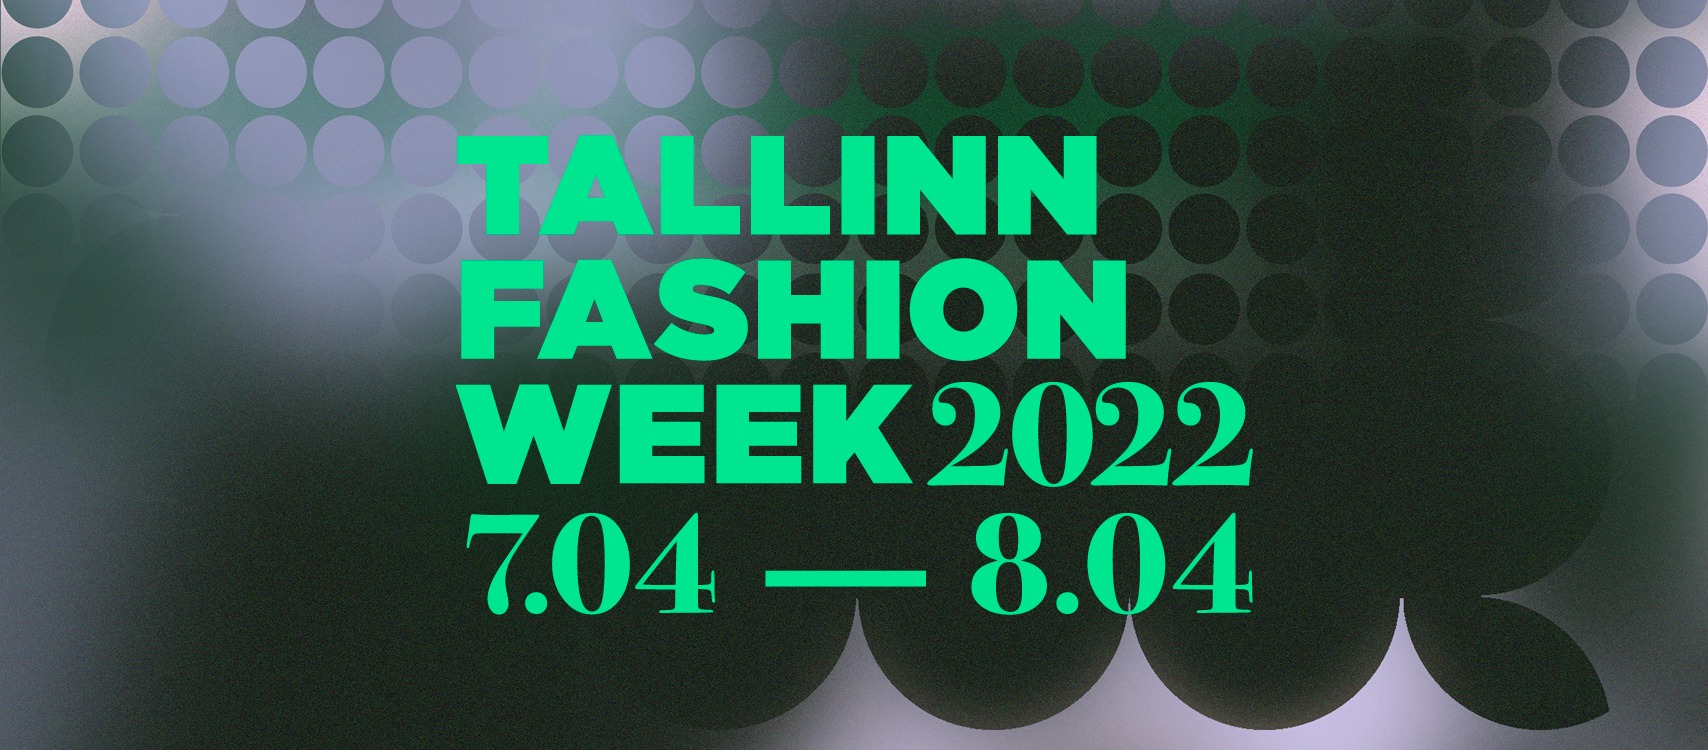 14440Tallinn Fashion Week 2022